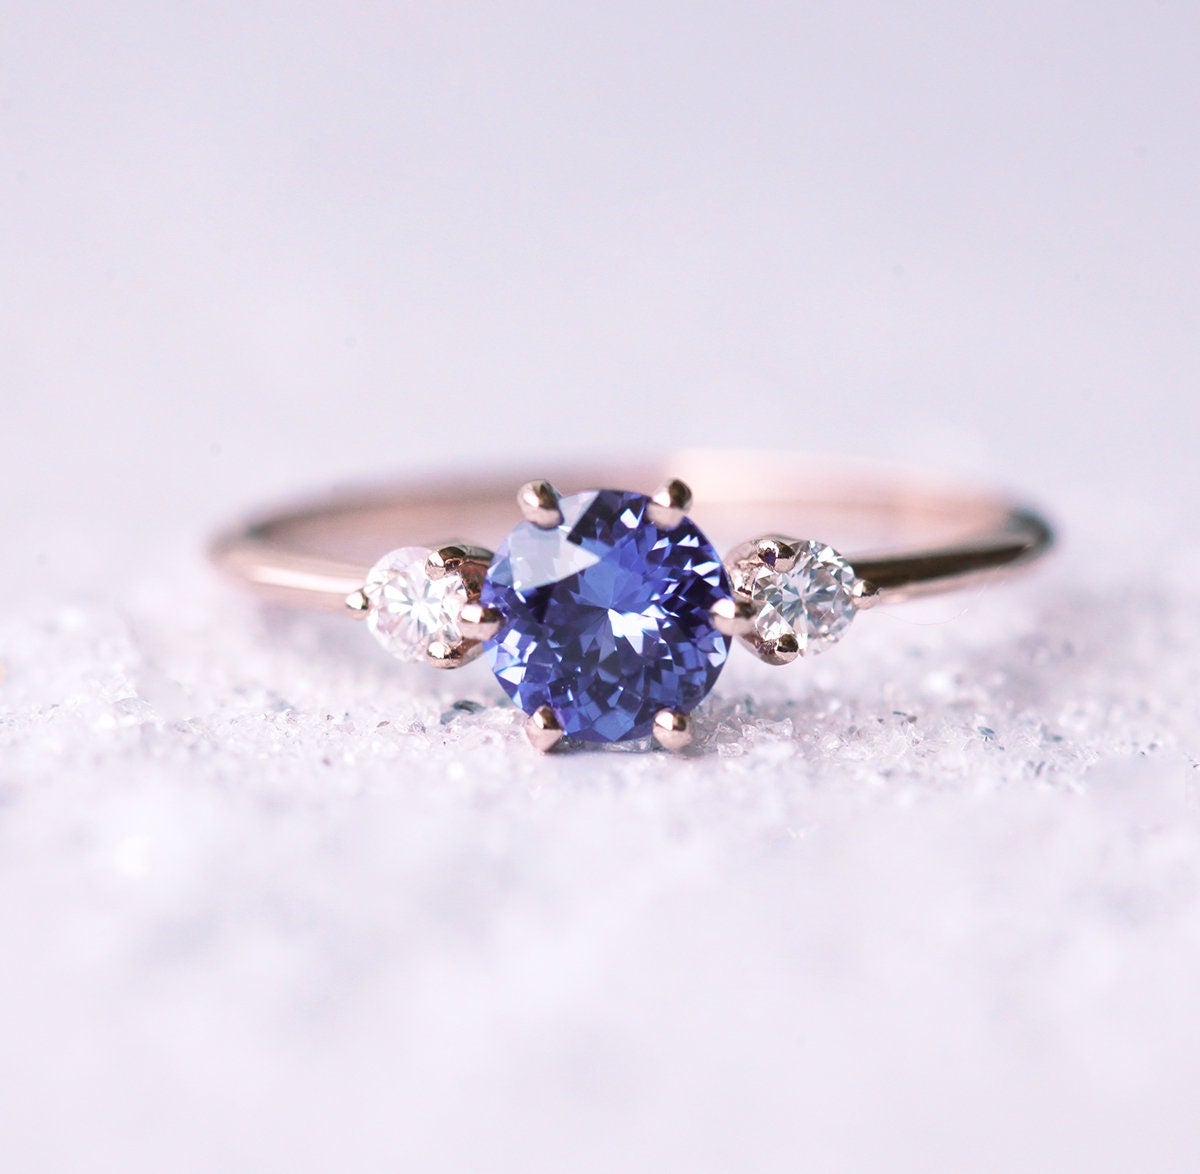 Round blue purple sapphire ring with side diamonds